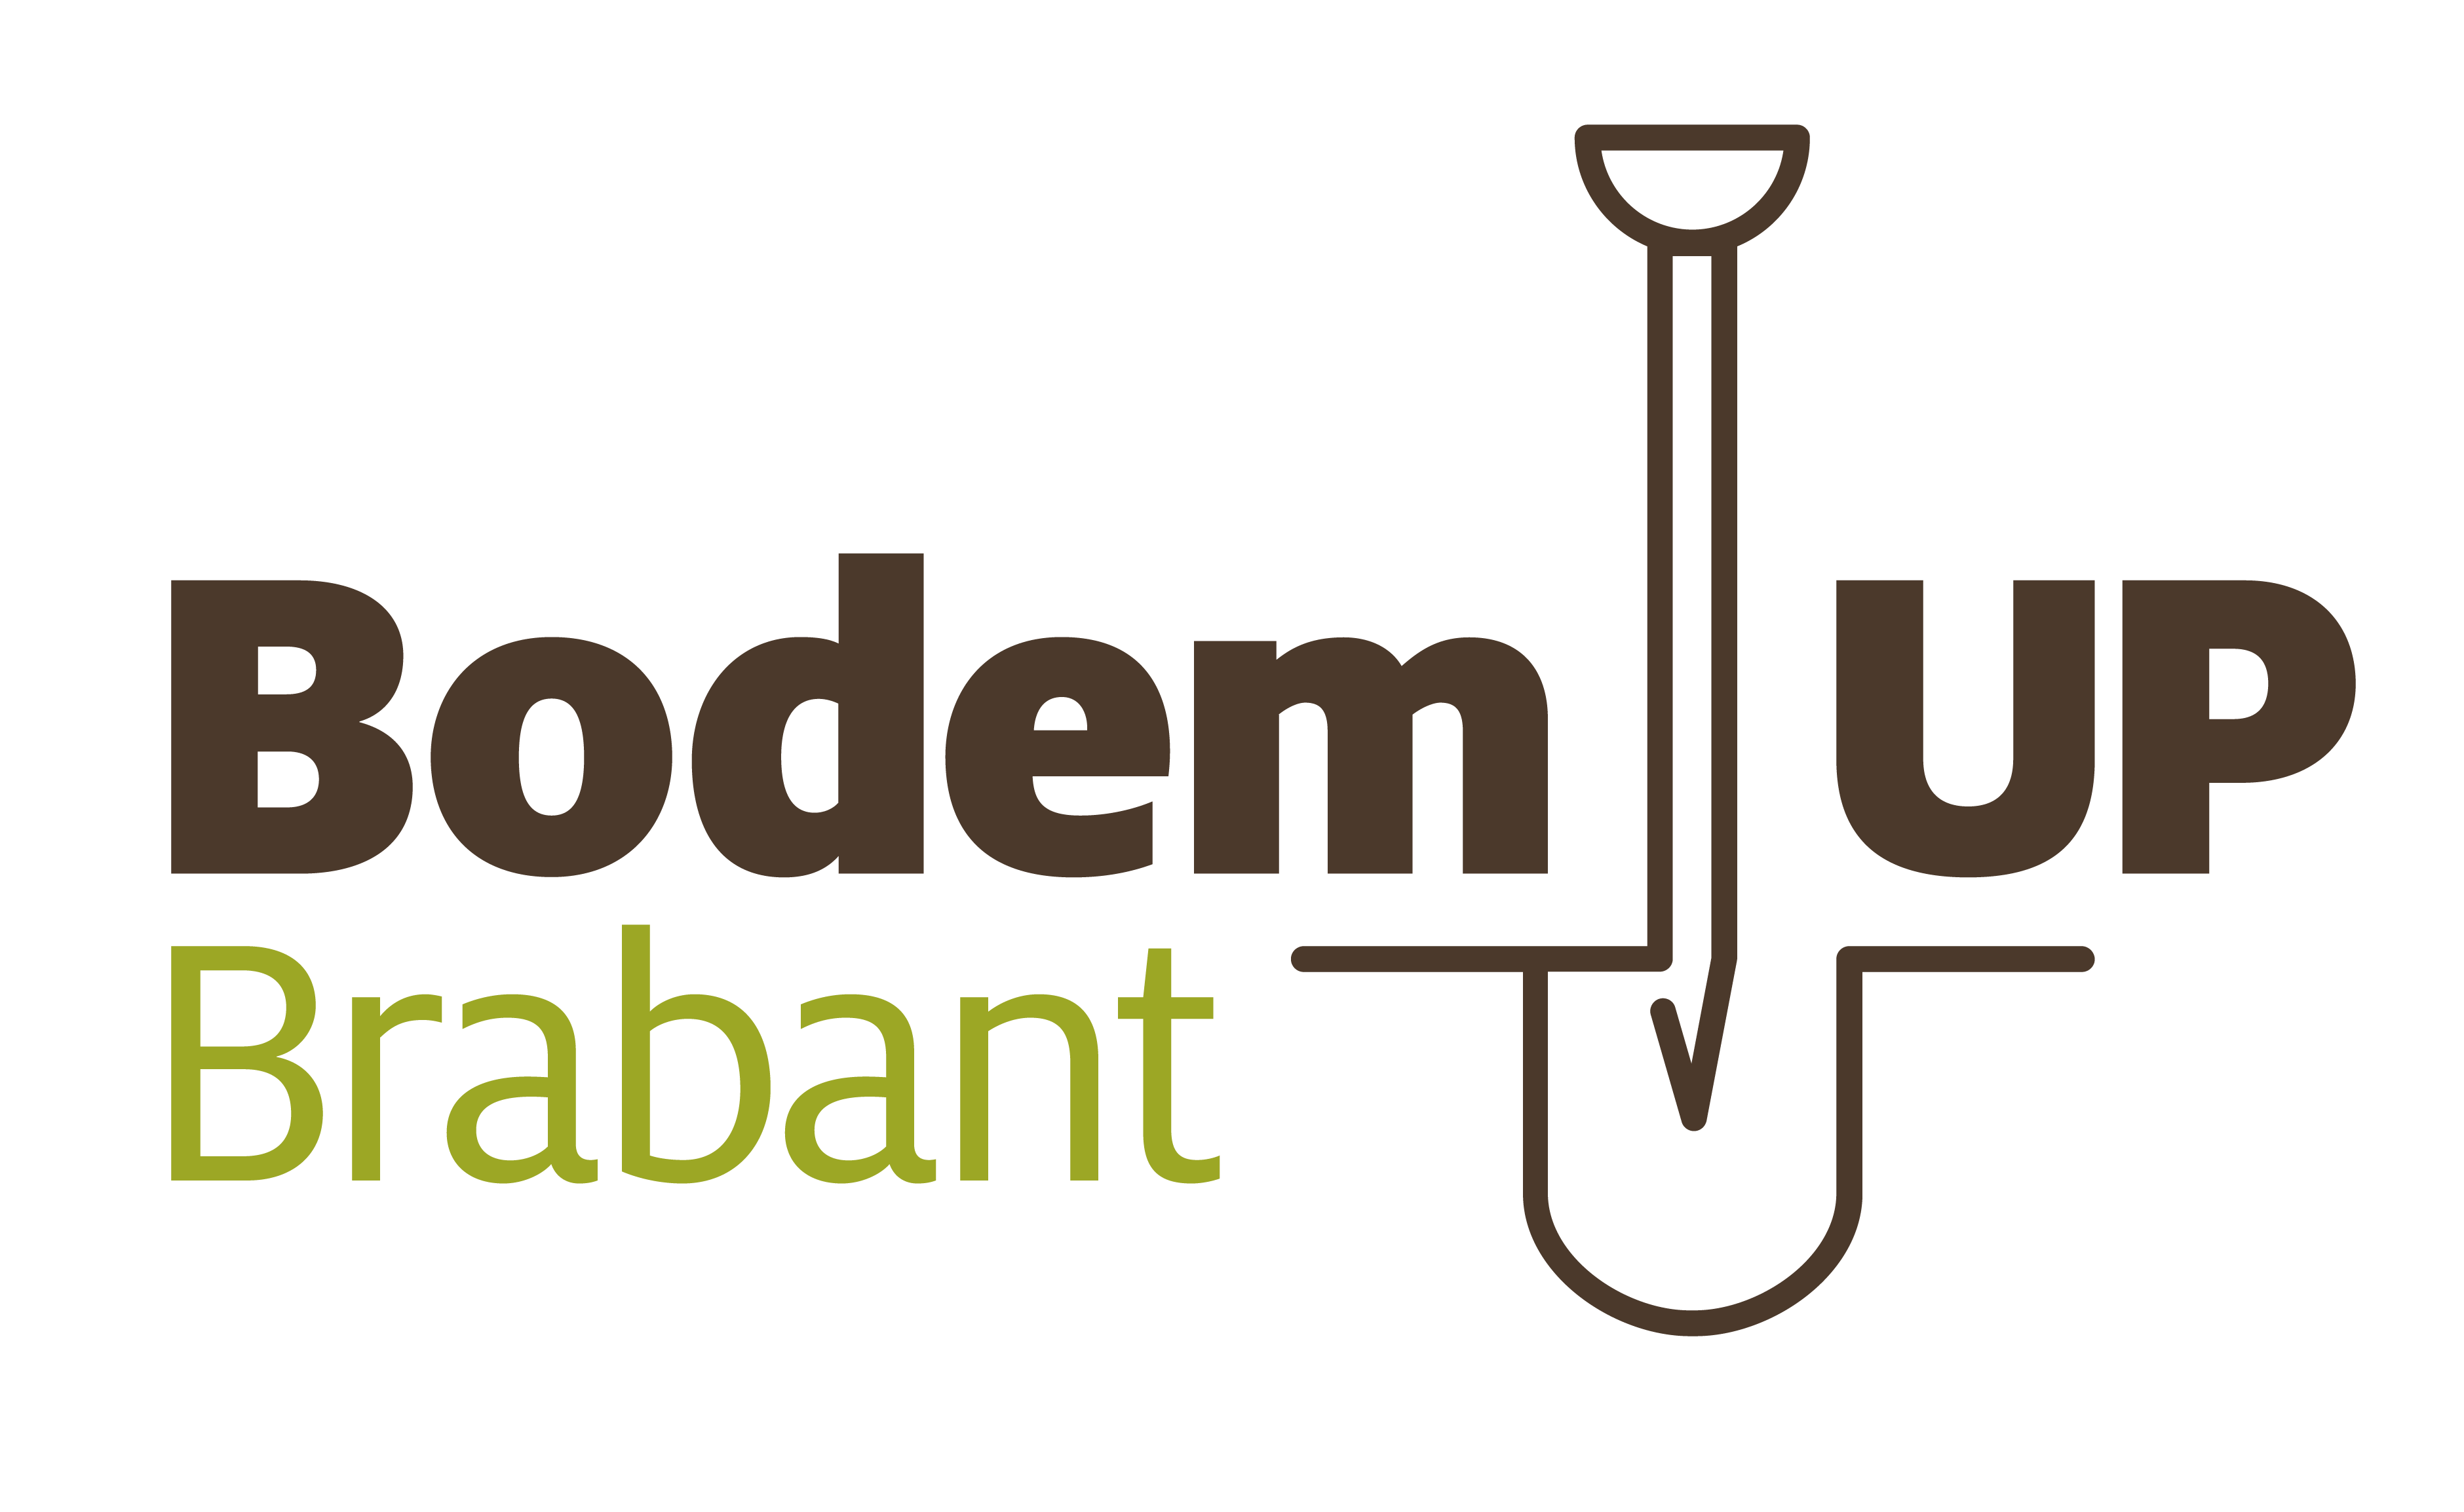 BodemUP Brabant logo